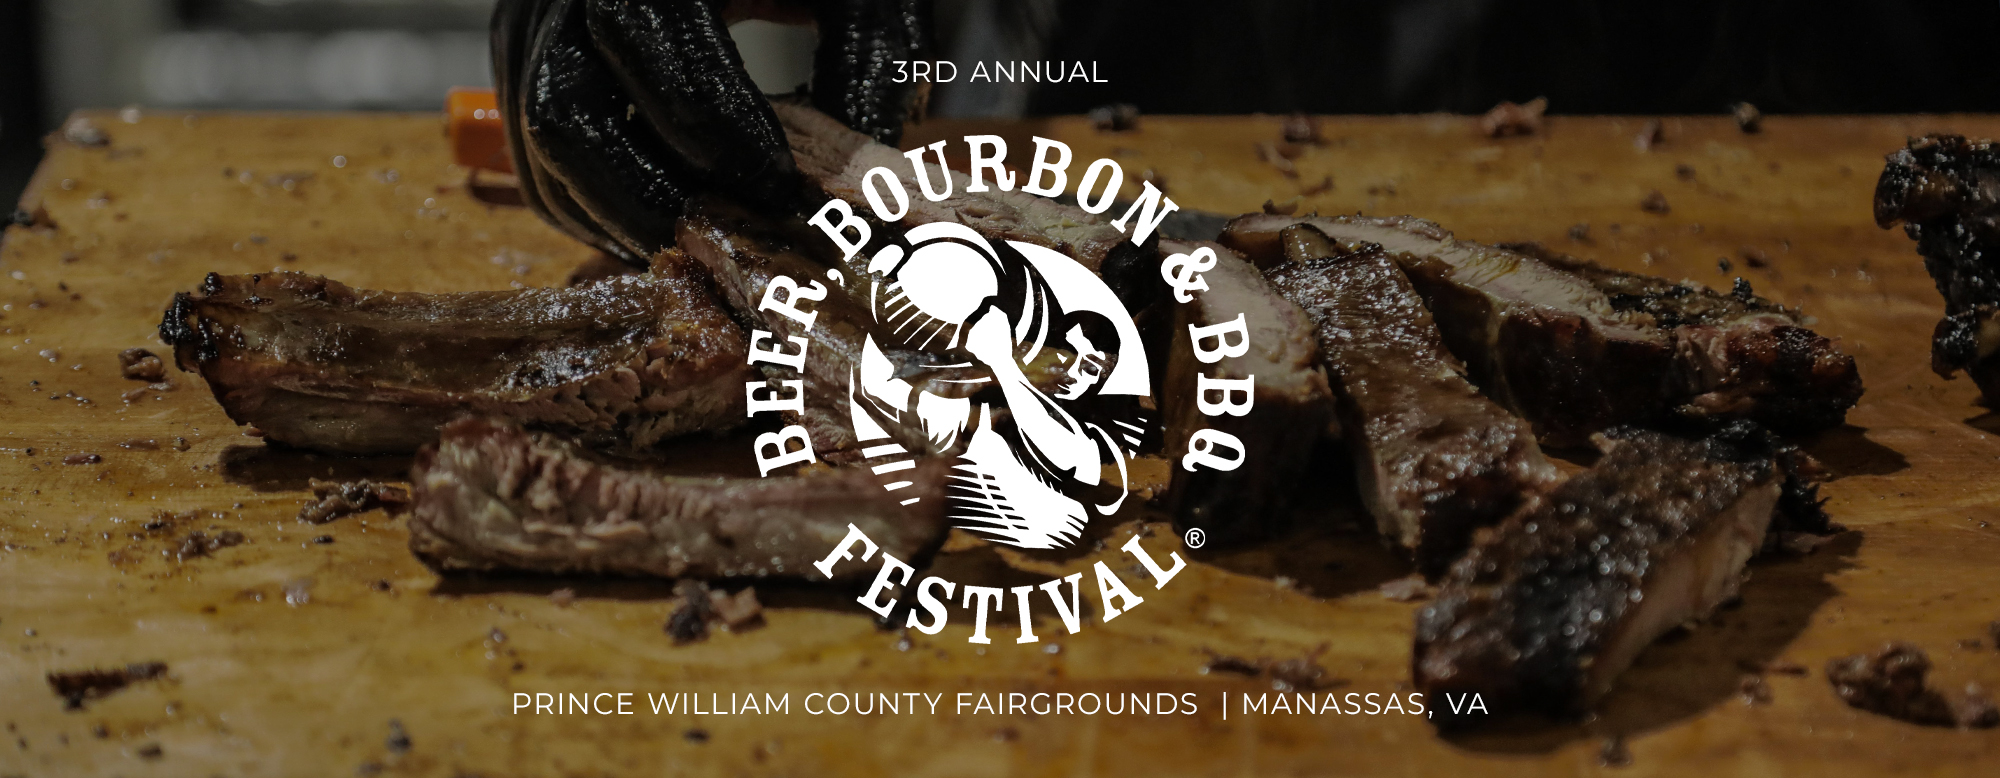 Beer, Bourbon & Barbecue Festival - NOVA